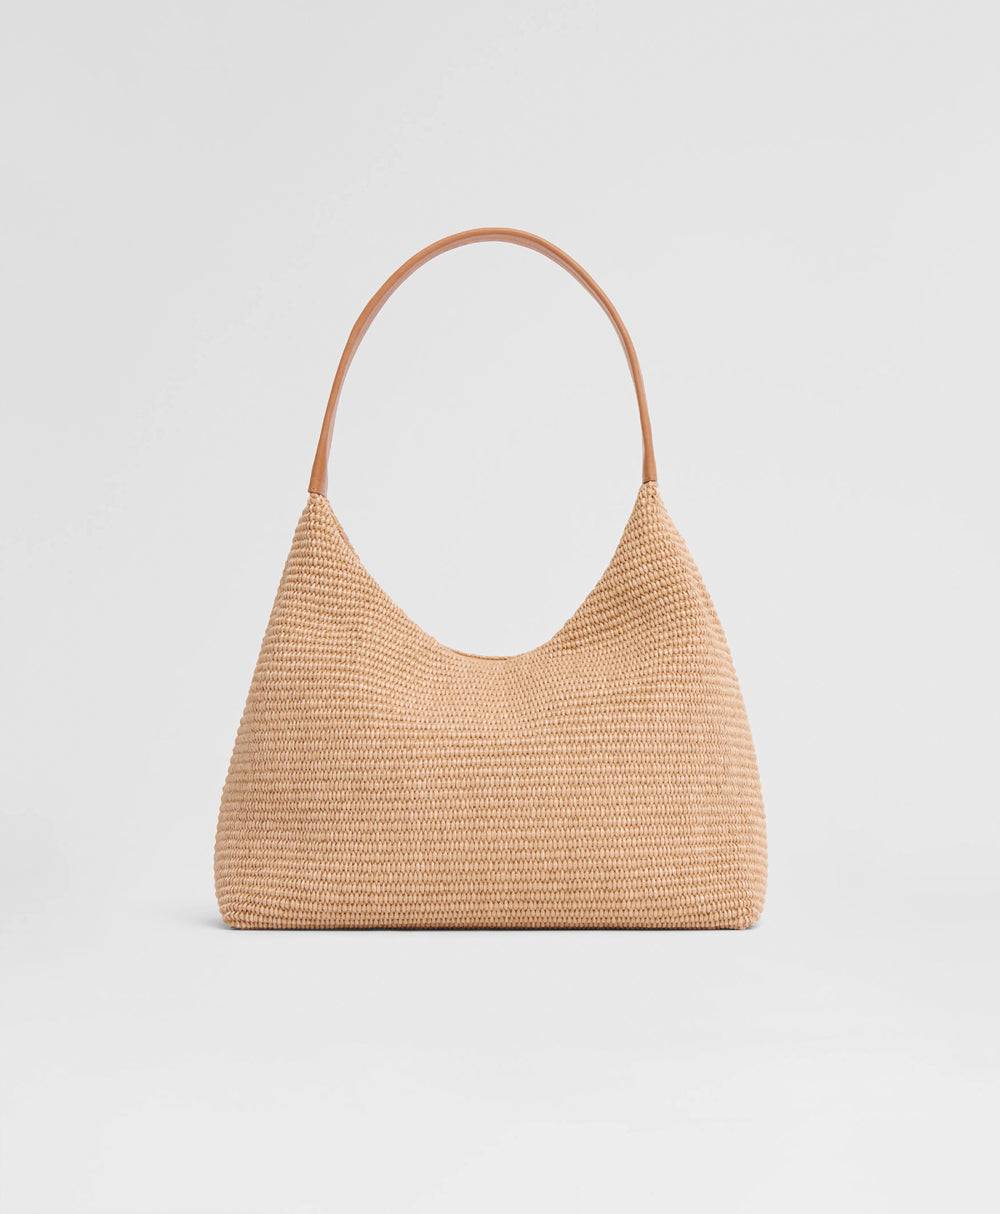 Bags for Women | Shop Backpacks & Crossbody Bags | Aritzia US